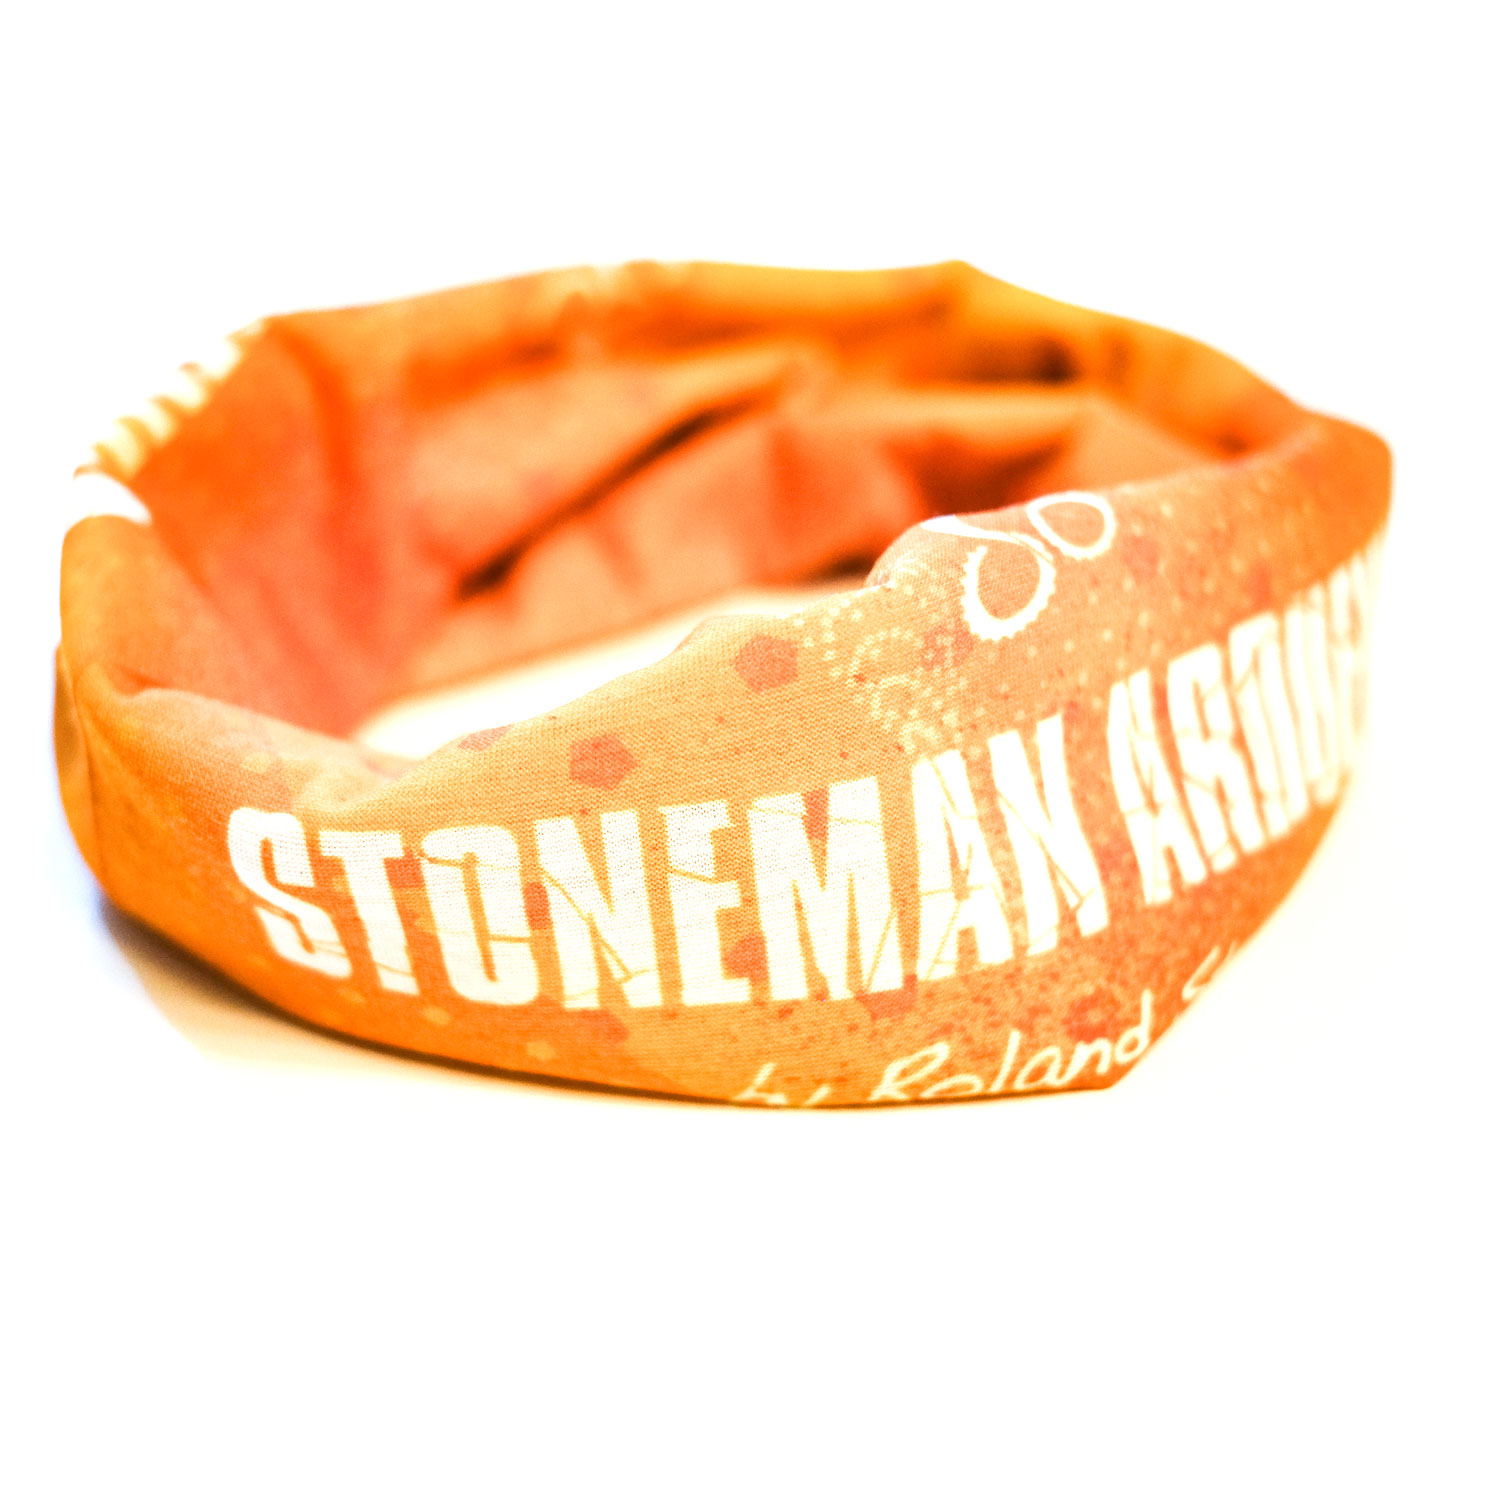 Productfoto van Stoneman Hero Multifunctional Cloth - Arduenna